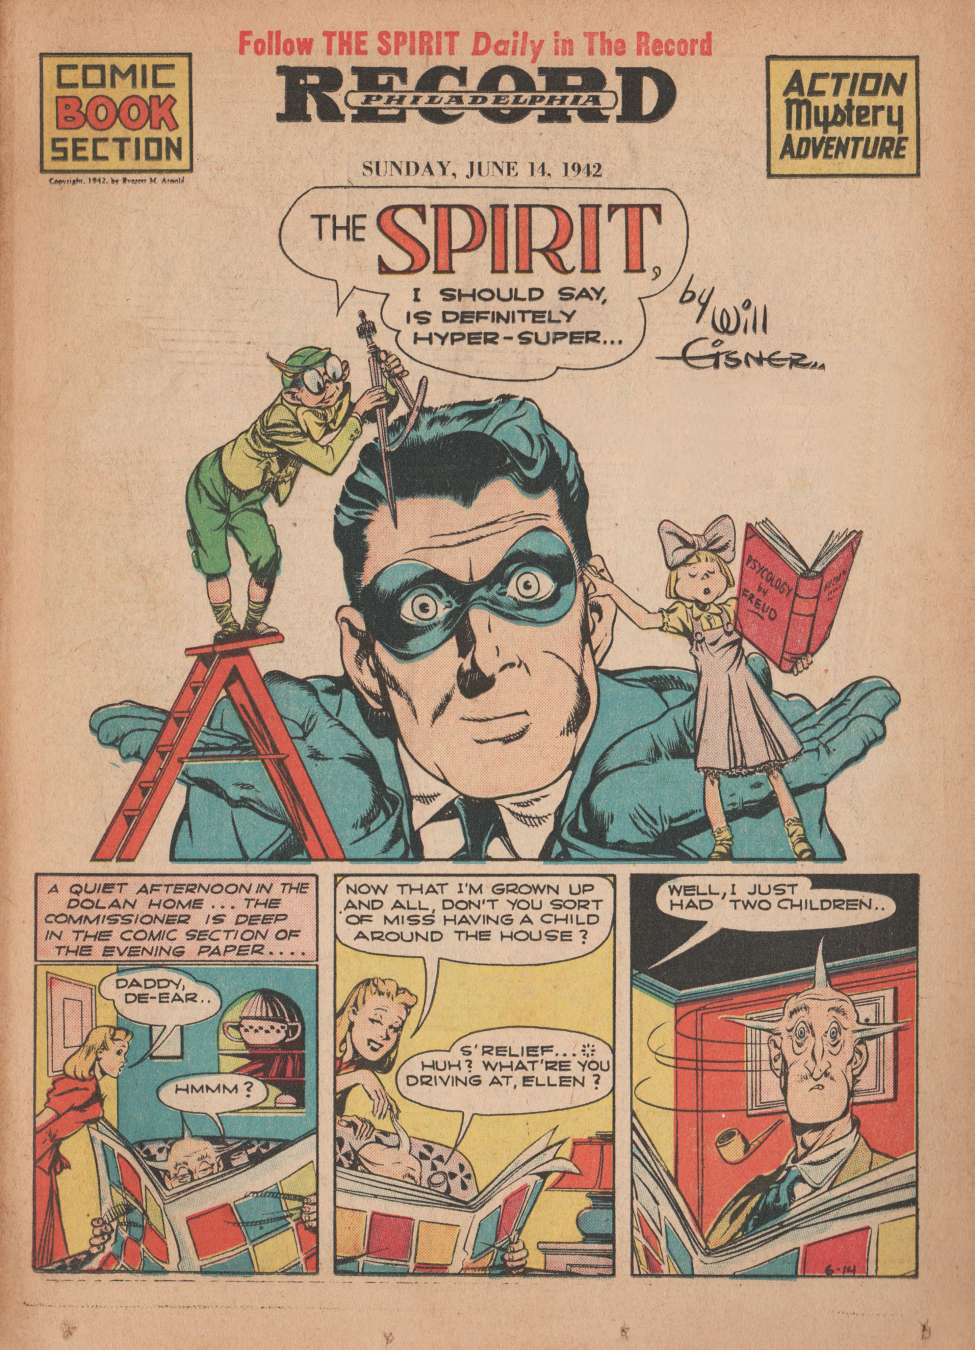 Comic Book Cover For The Spirit (1942-06-14) - Philadelphia Record